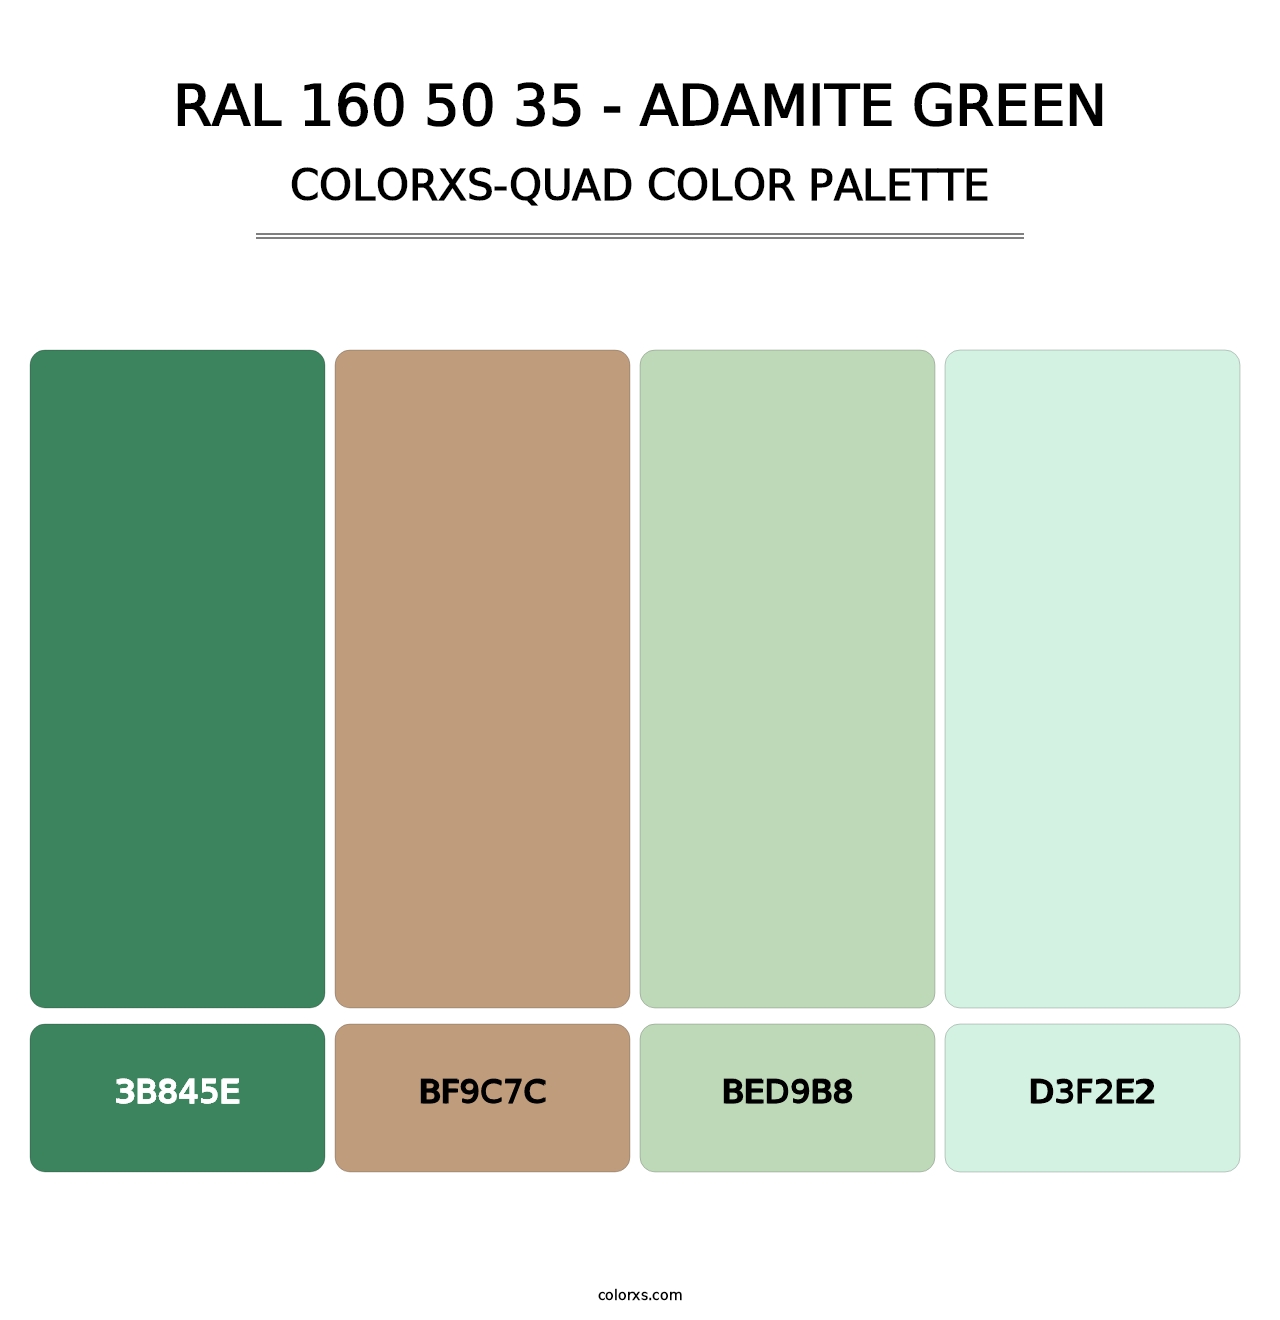 RAL 160 50 35 - Adamite Green - Colorxs Quad Palette